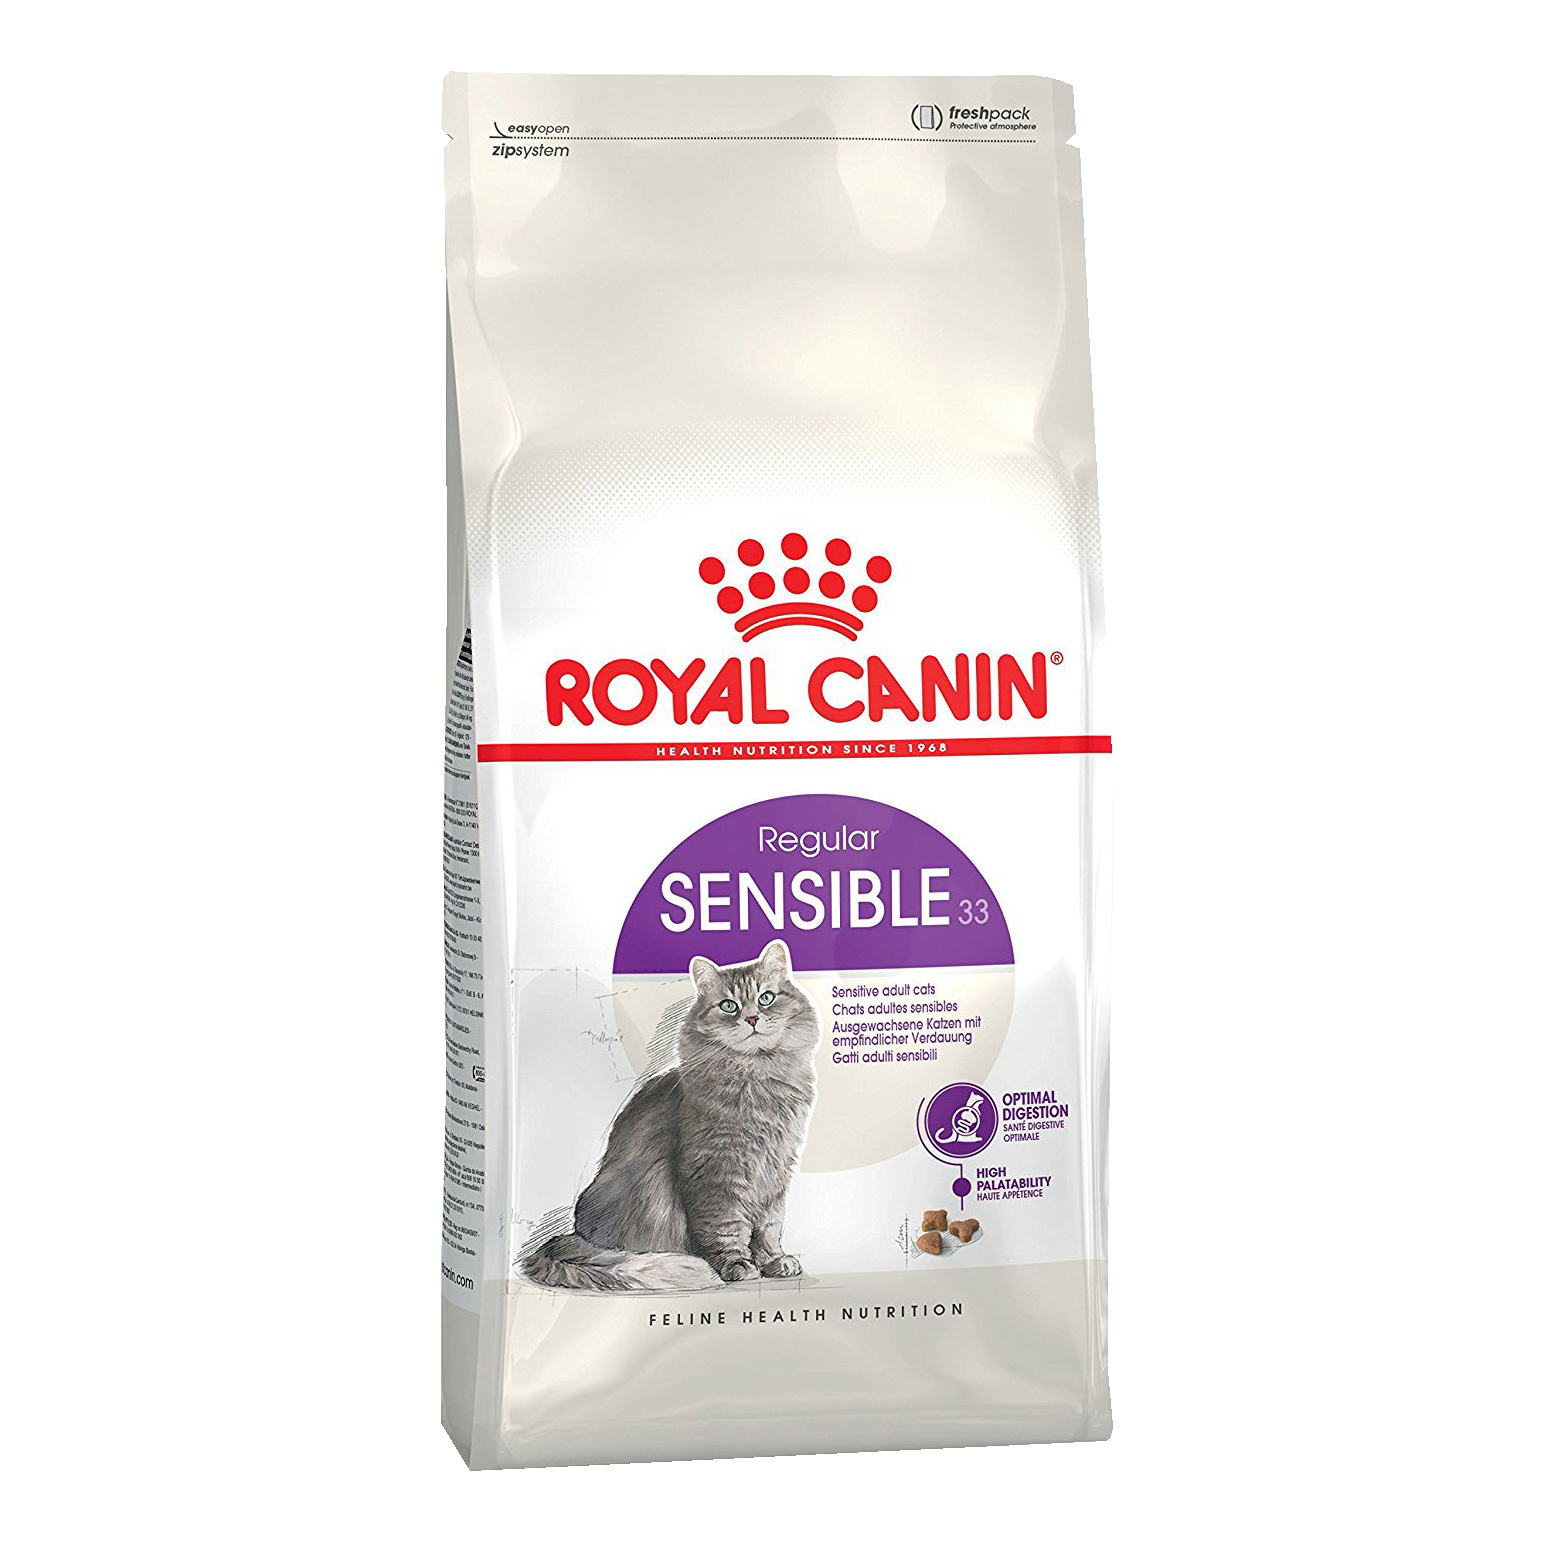 Royal canin для кошек 2кг. Royal Canin Protein exigent. Роял Канин Стерилайзд 7+. Роял Канин Сенсибл 33 для кошек. Сухой корм для кошек Royal Canin Sterilised.